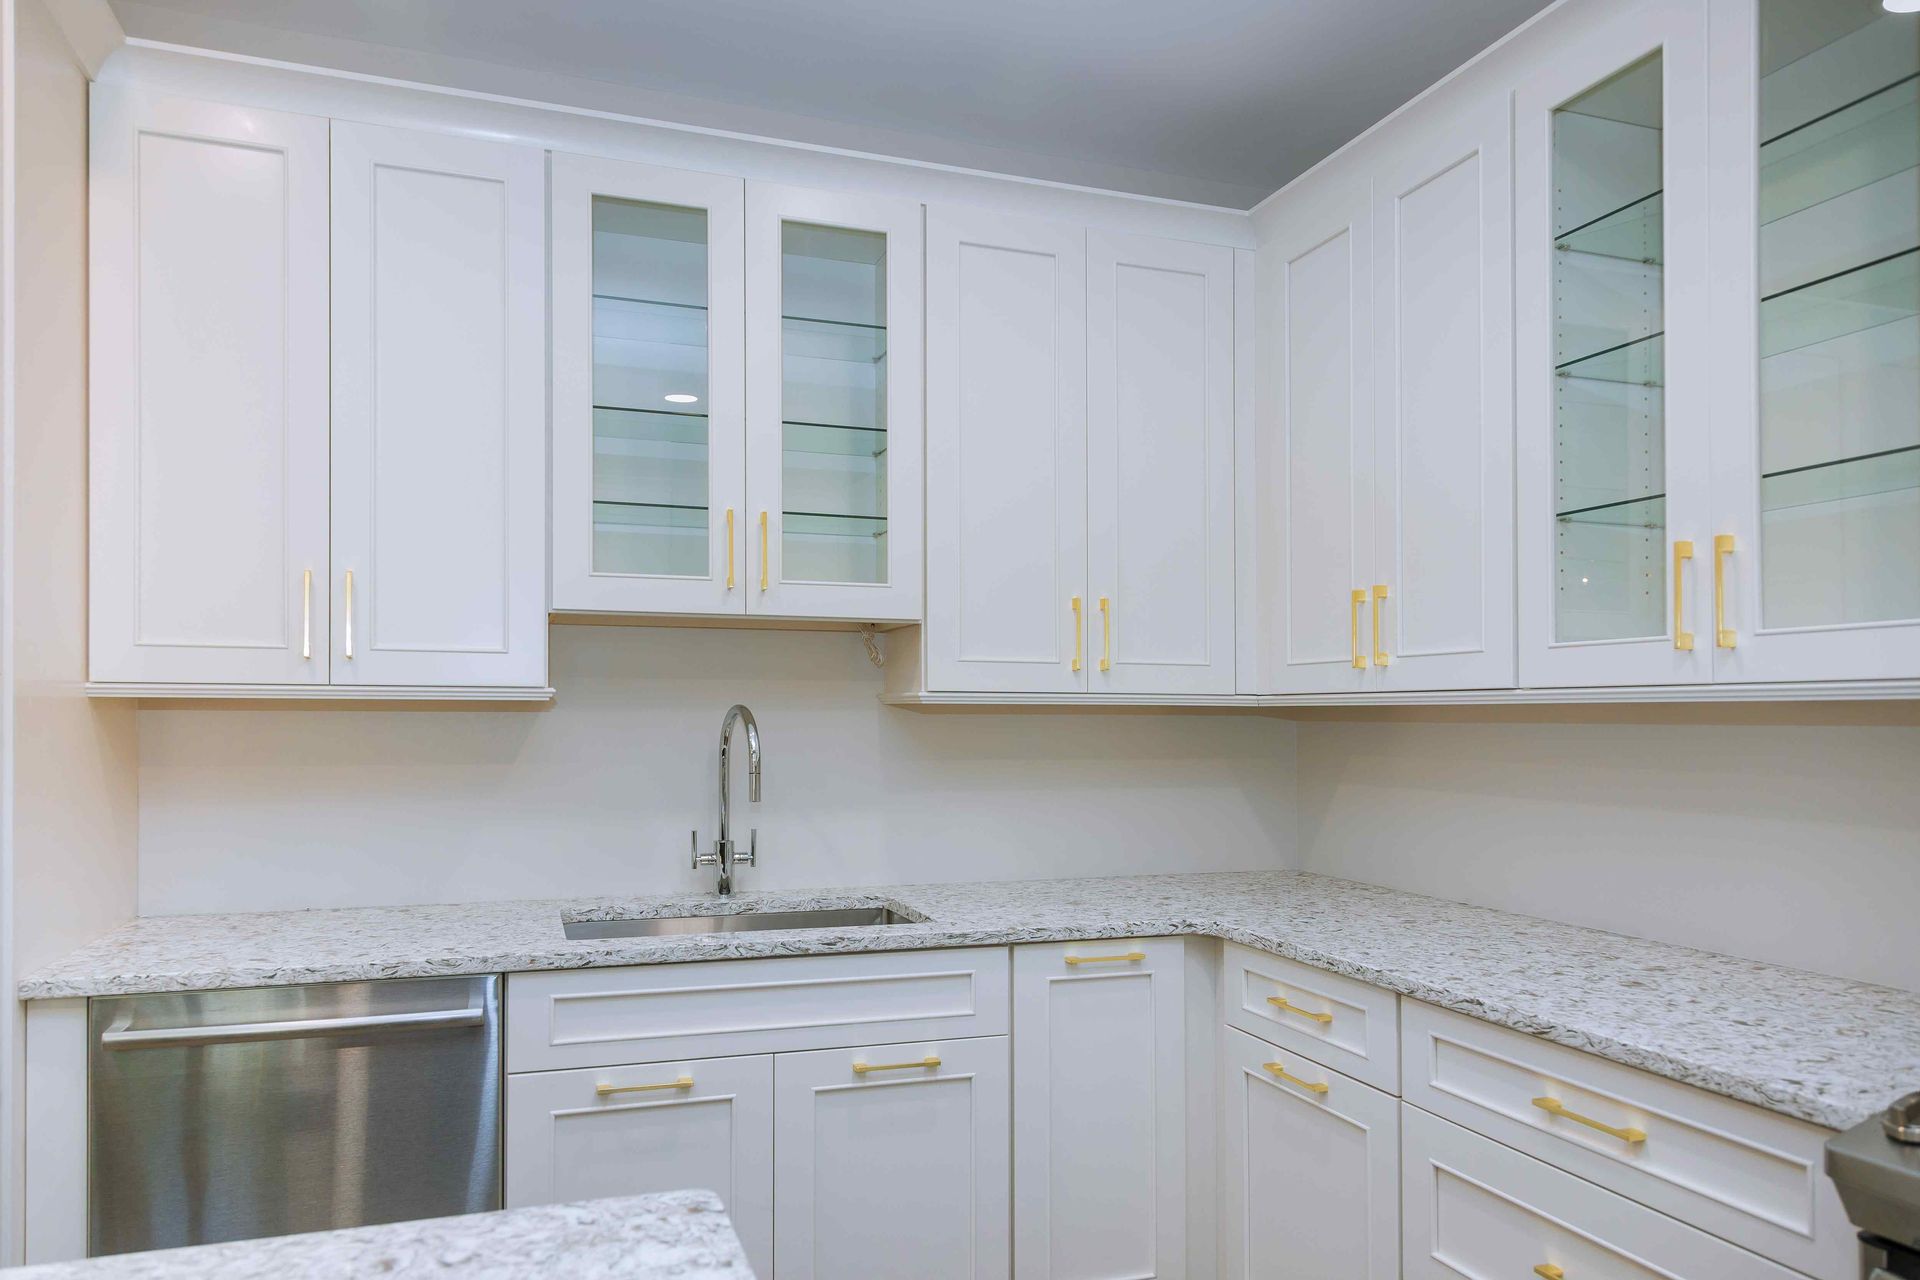 Cabinet Refinishing in White Kitchen